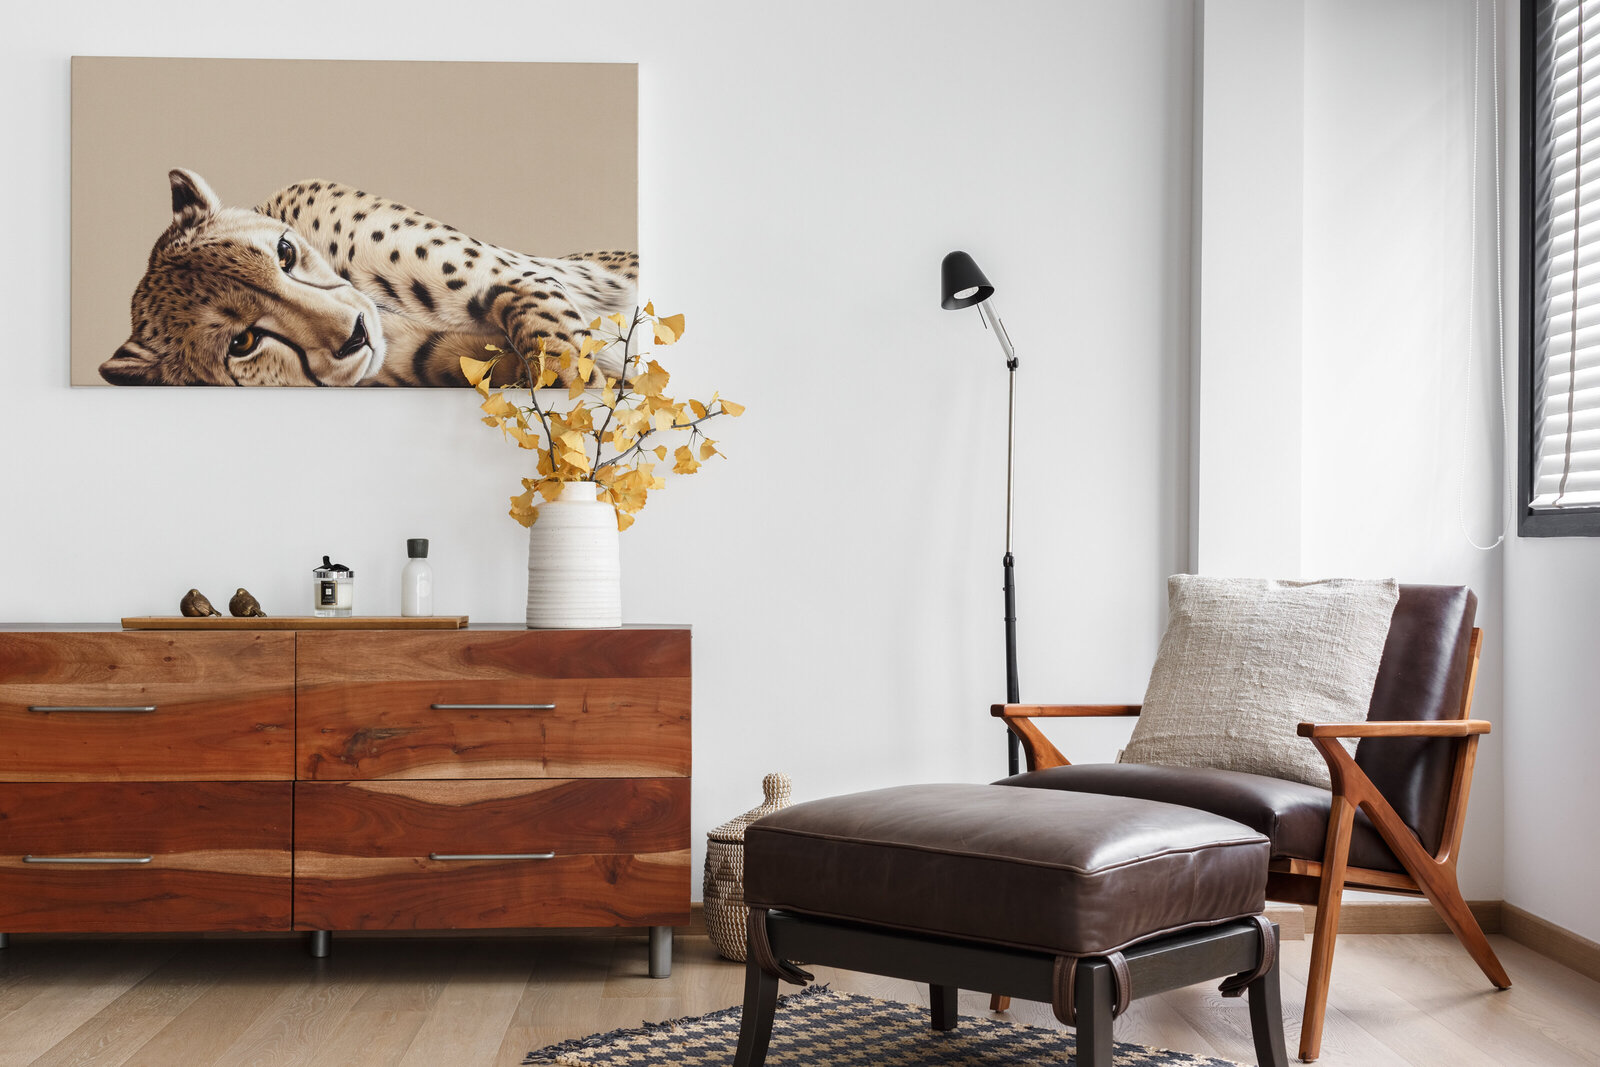 wooden furniture with tiger artwork